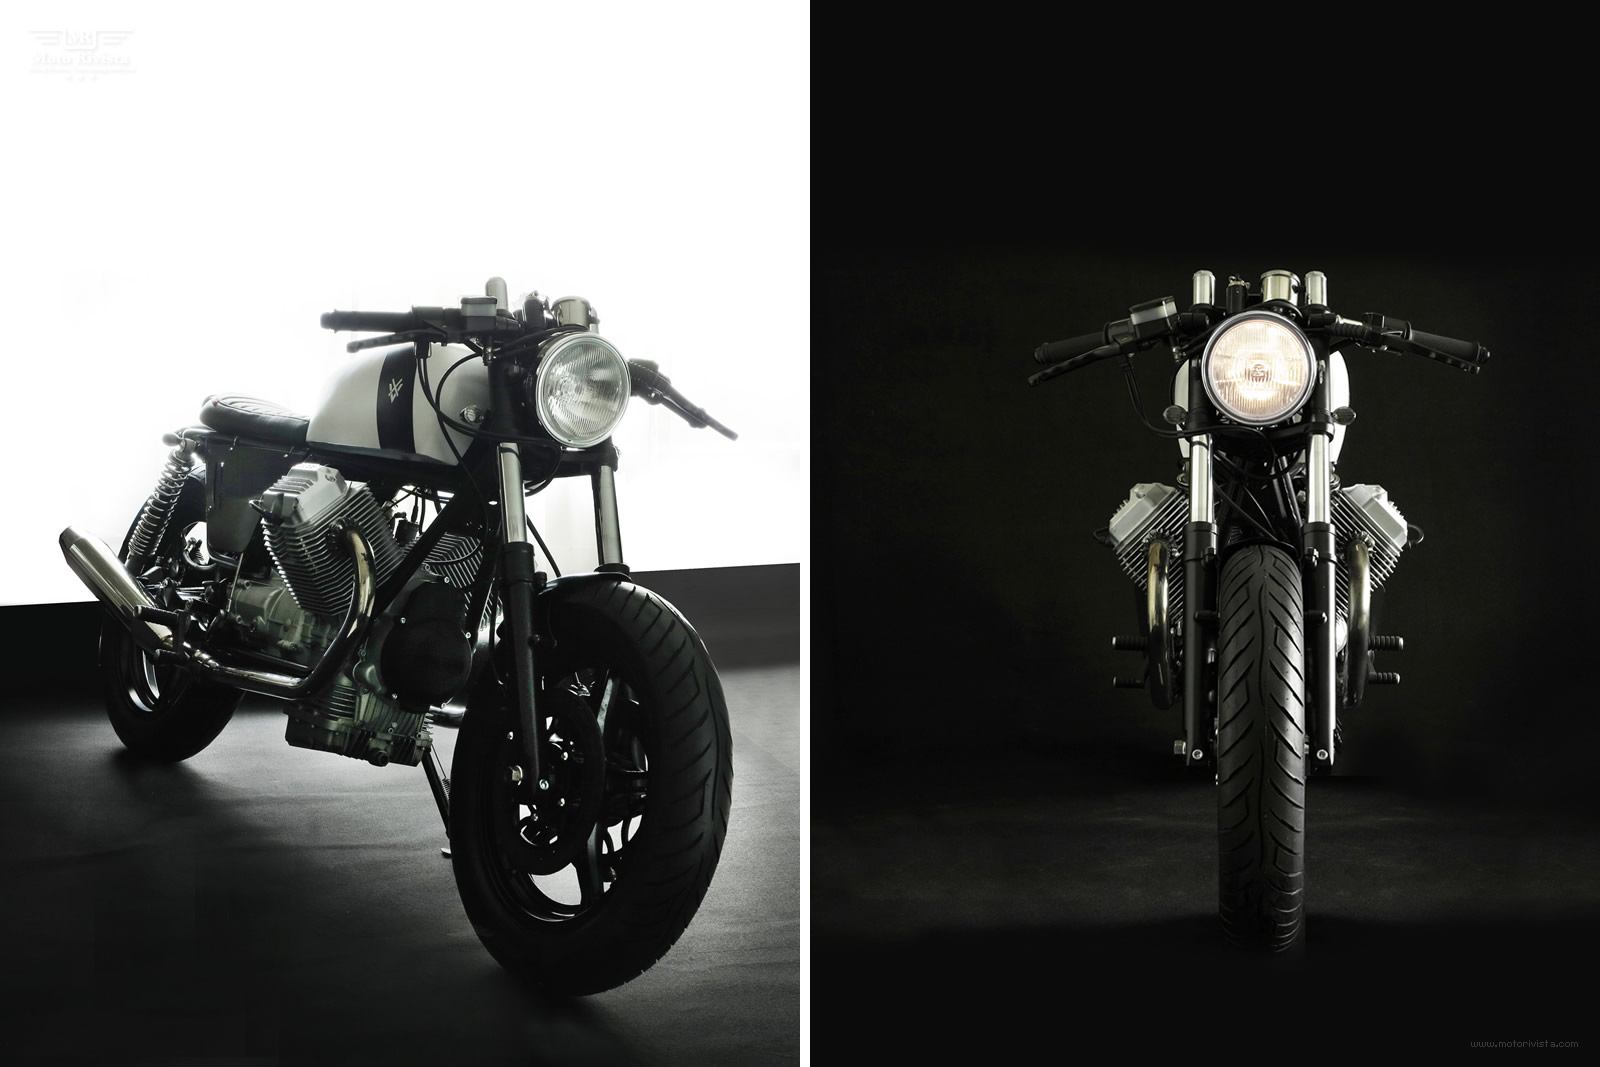 Taking the customization tradition further is Italian bespoke motorbike builder Venier Customs.